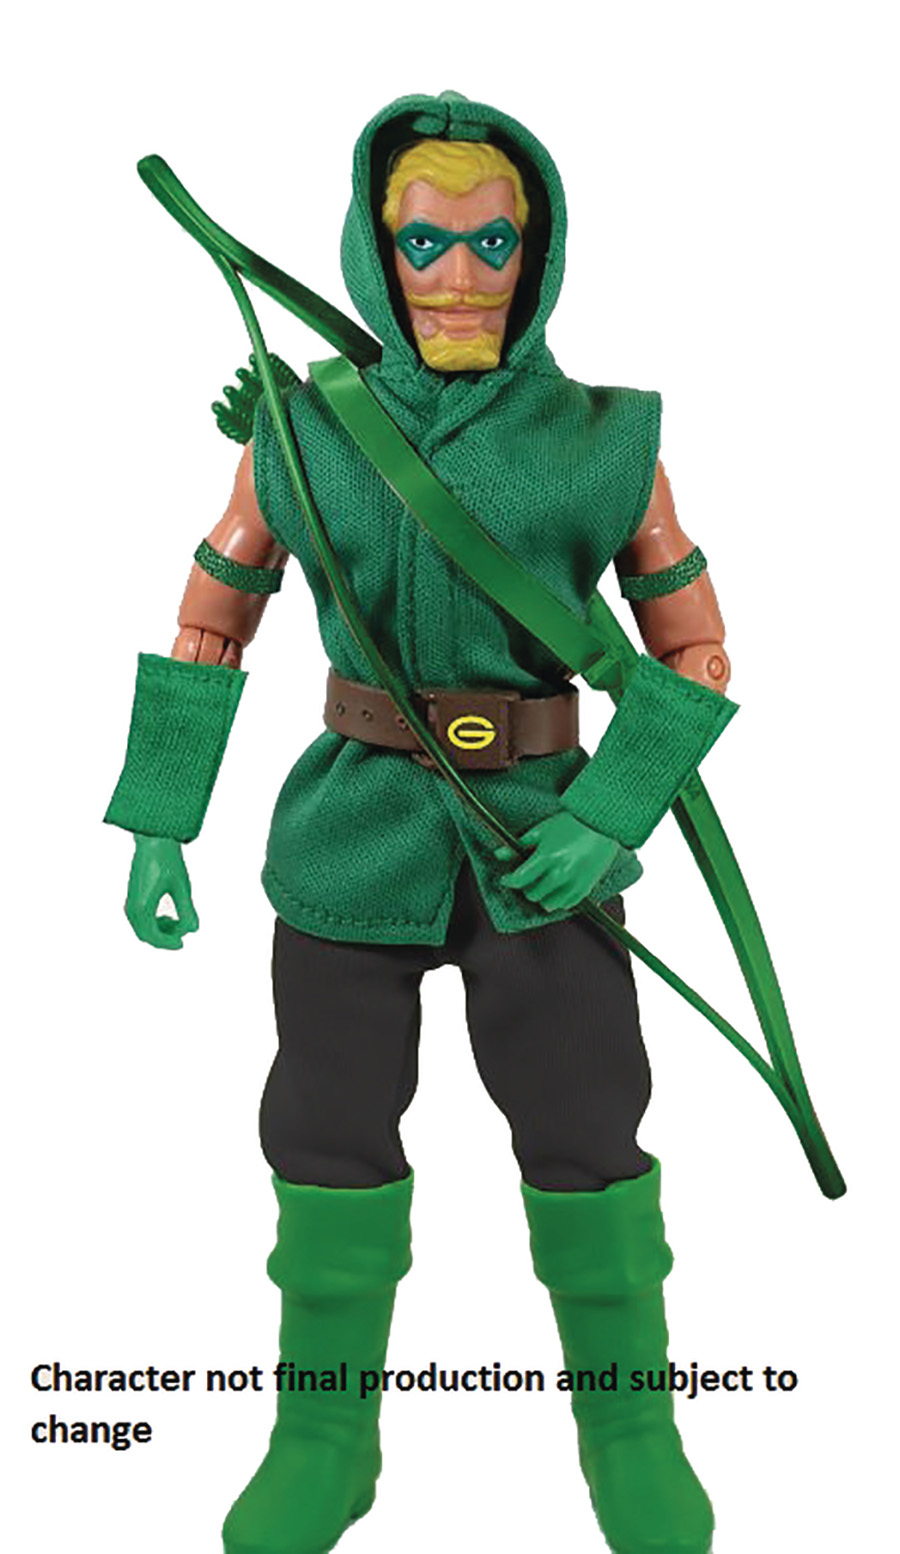 Mego DC Heroes 8-Inch Action Figure - Green Arrow